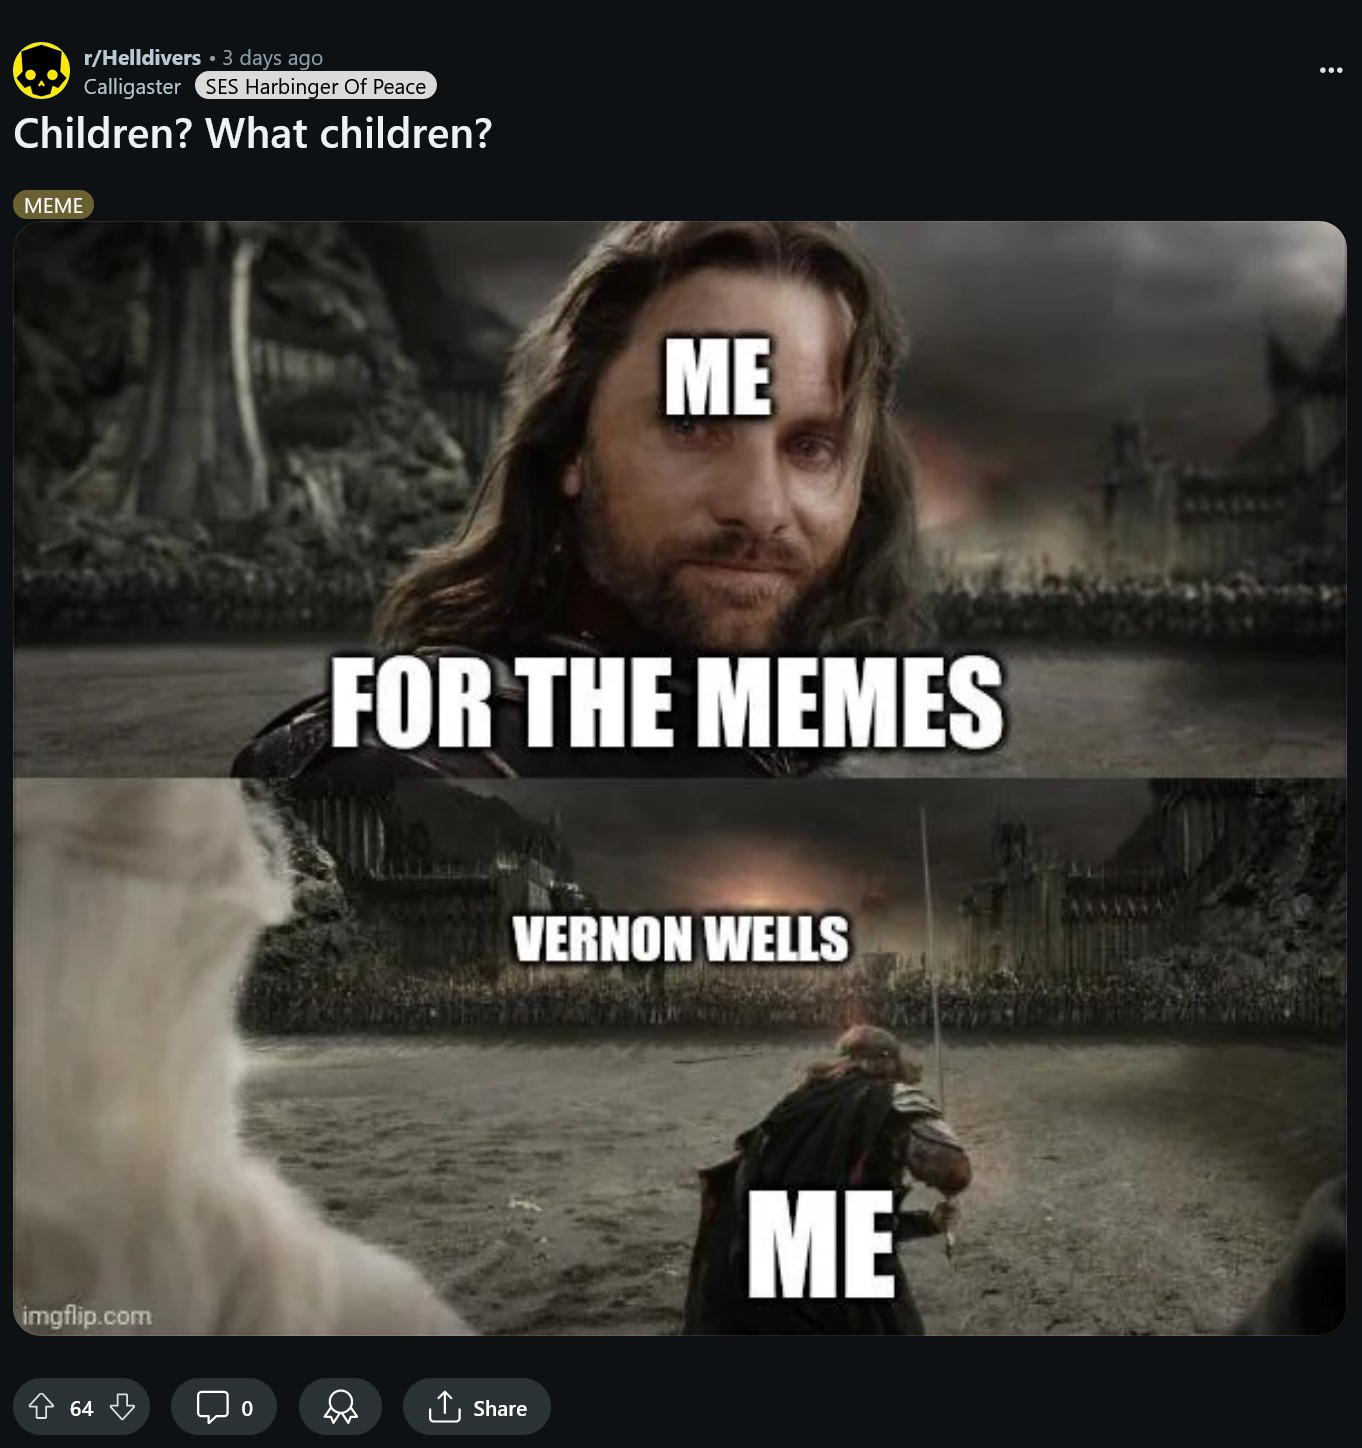 Helldivers 2 'Save the Children' meme